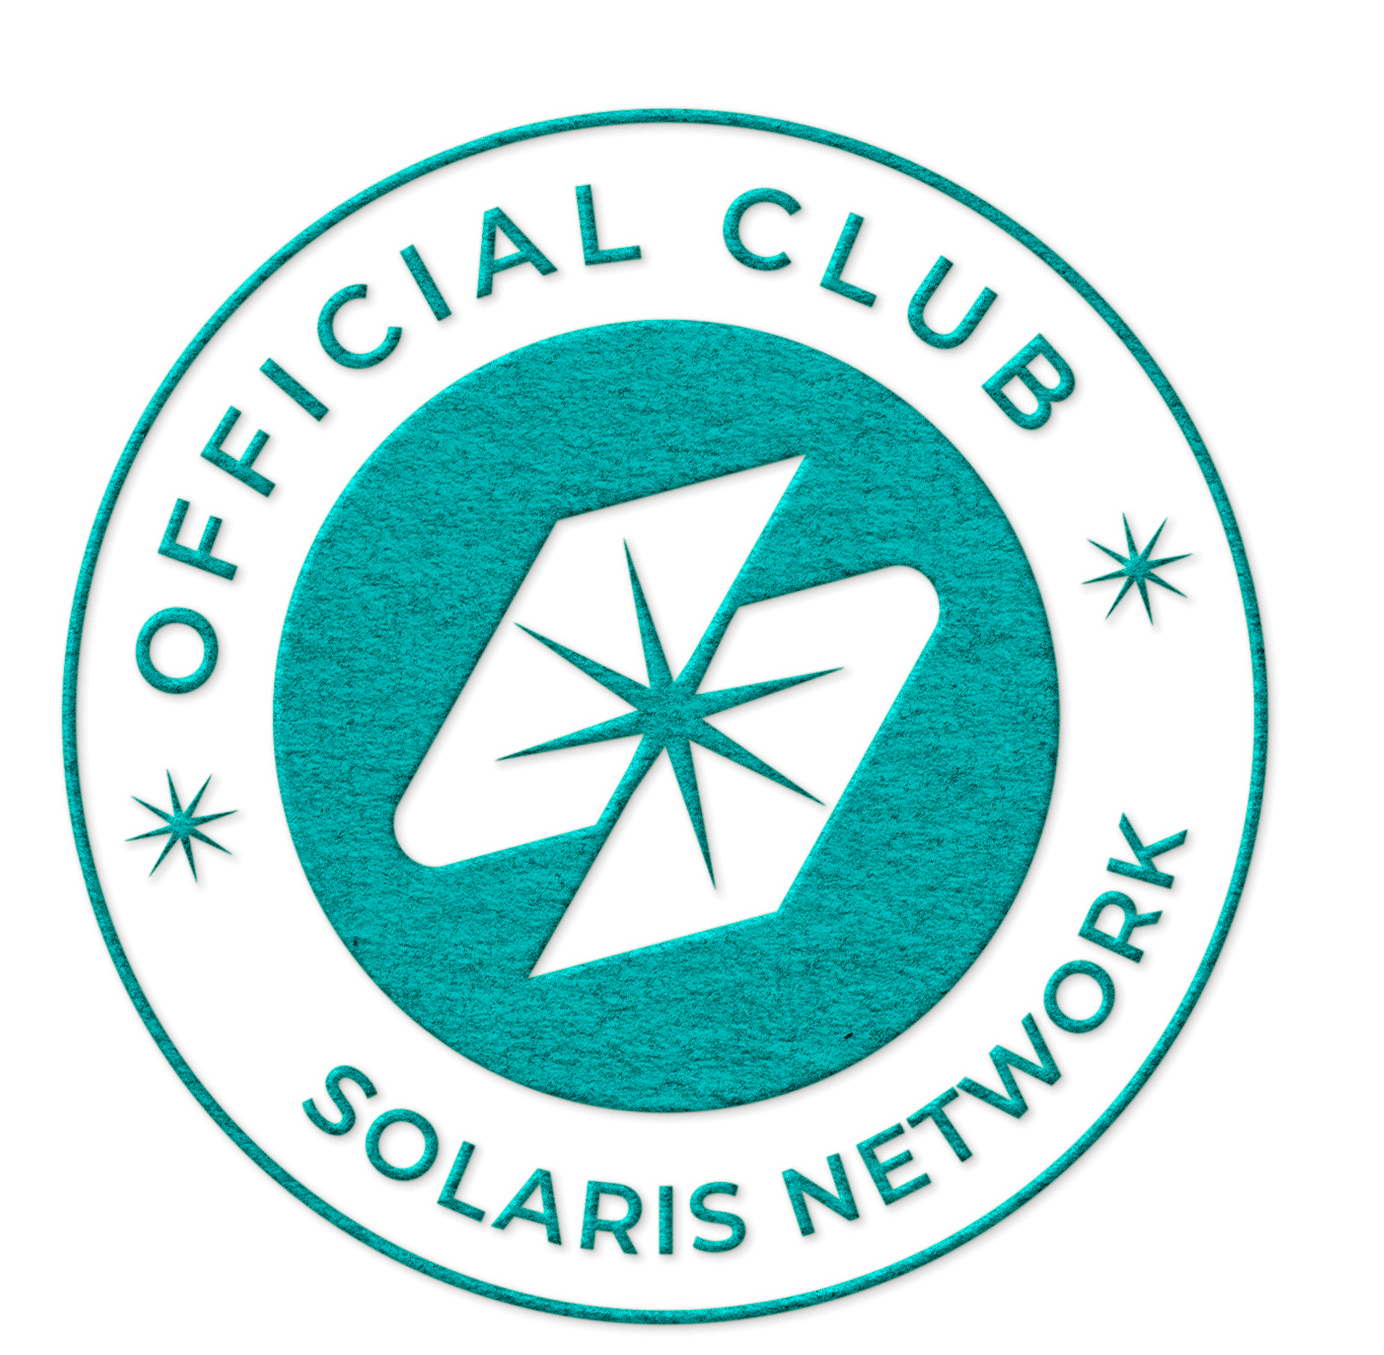 Club Solaris Vacation Network